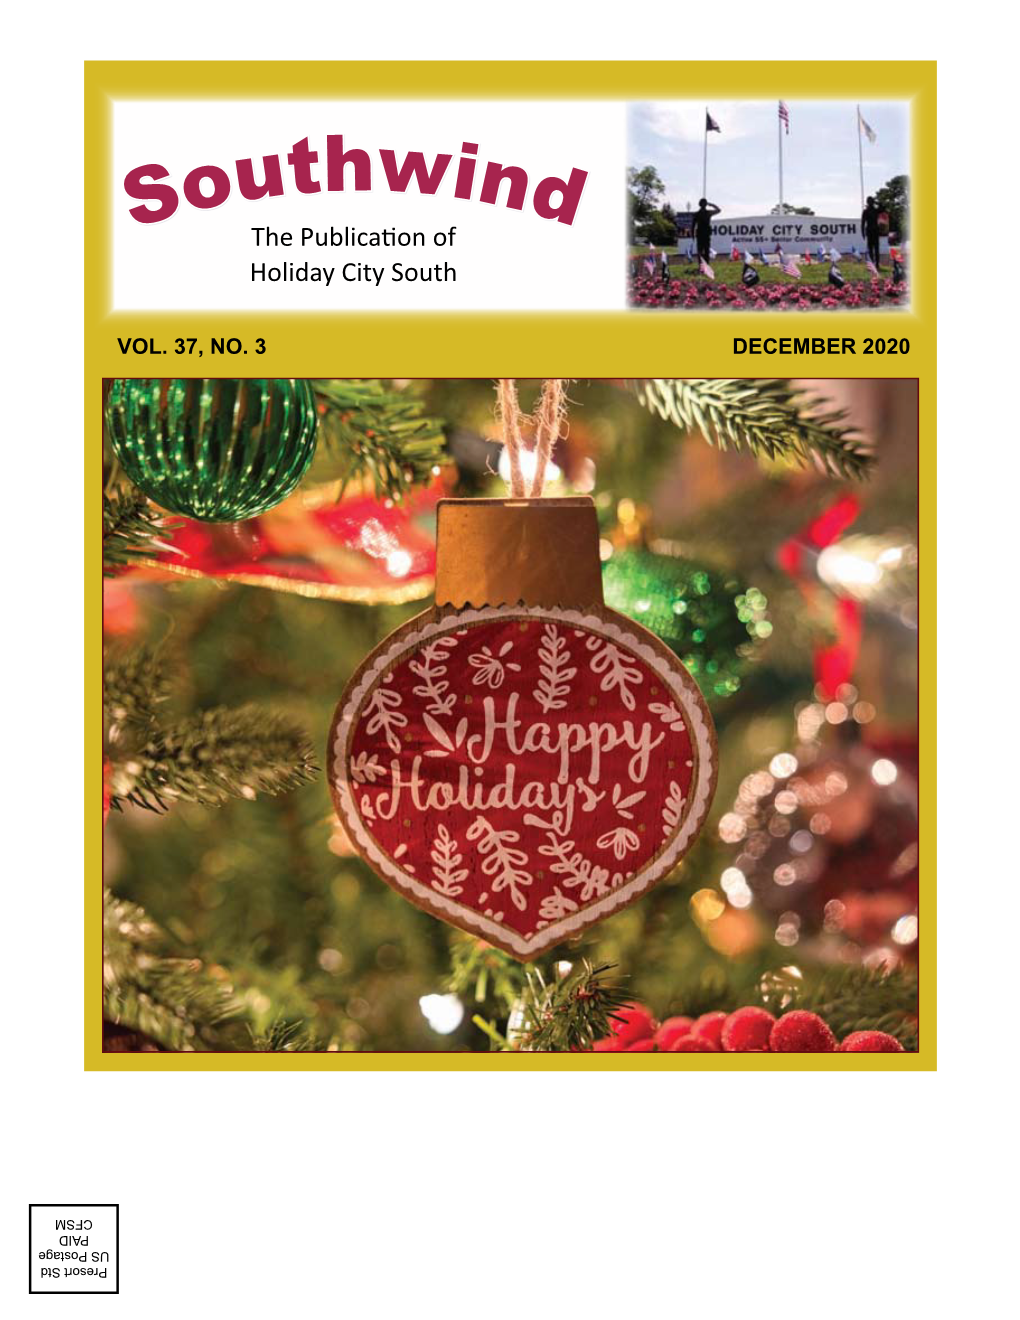 Southwind December 2020